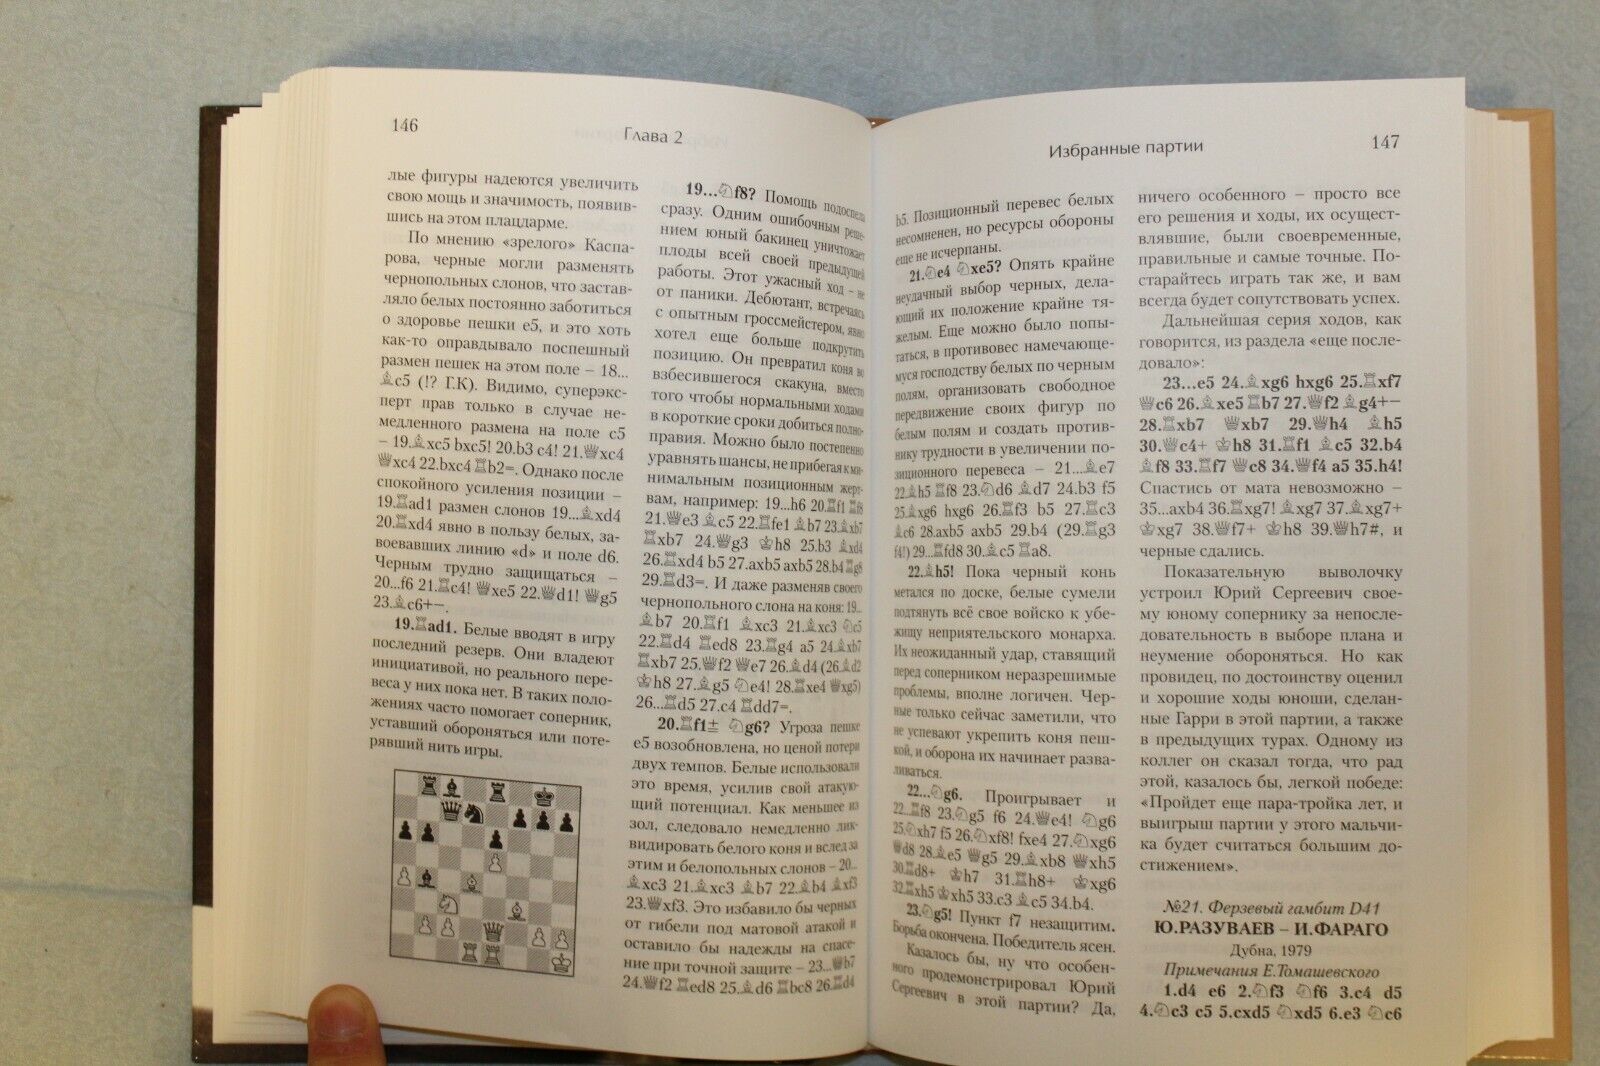 11015.Chess Book signed by B.Postovsky to R.Bilunova. Academic of Chess. Razuvaev